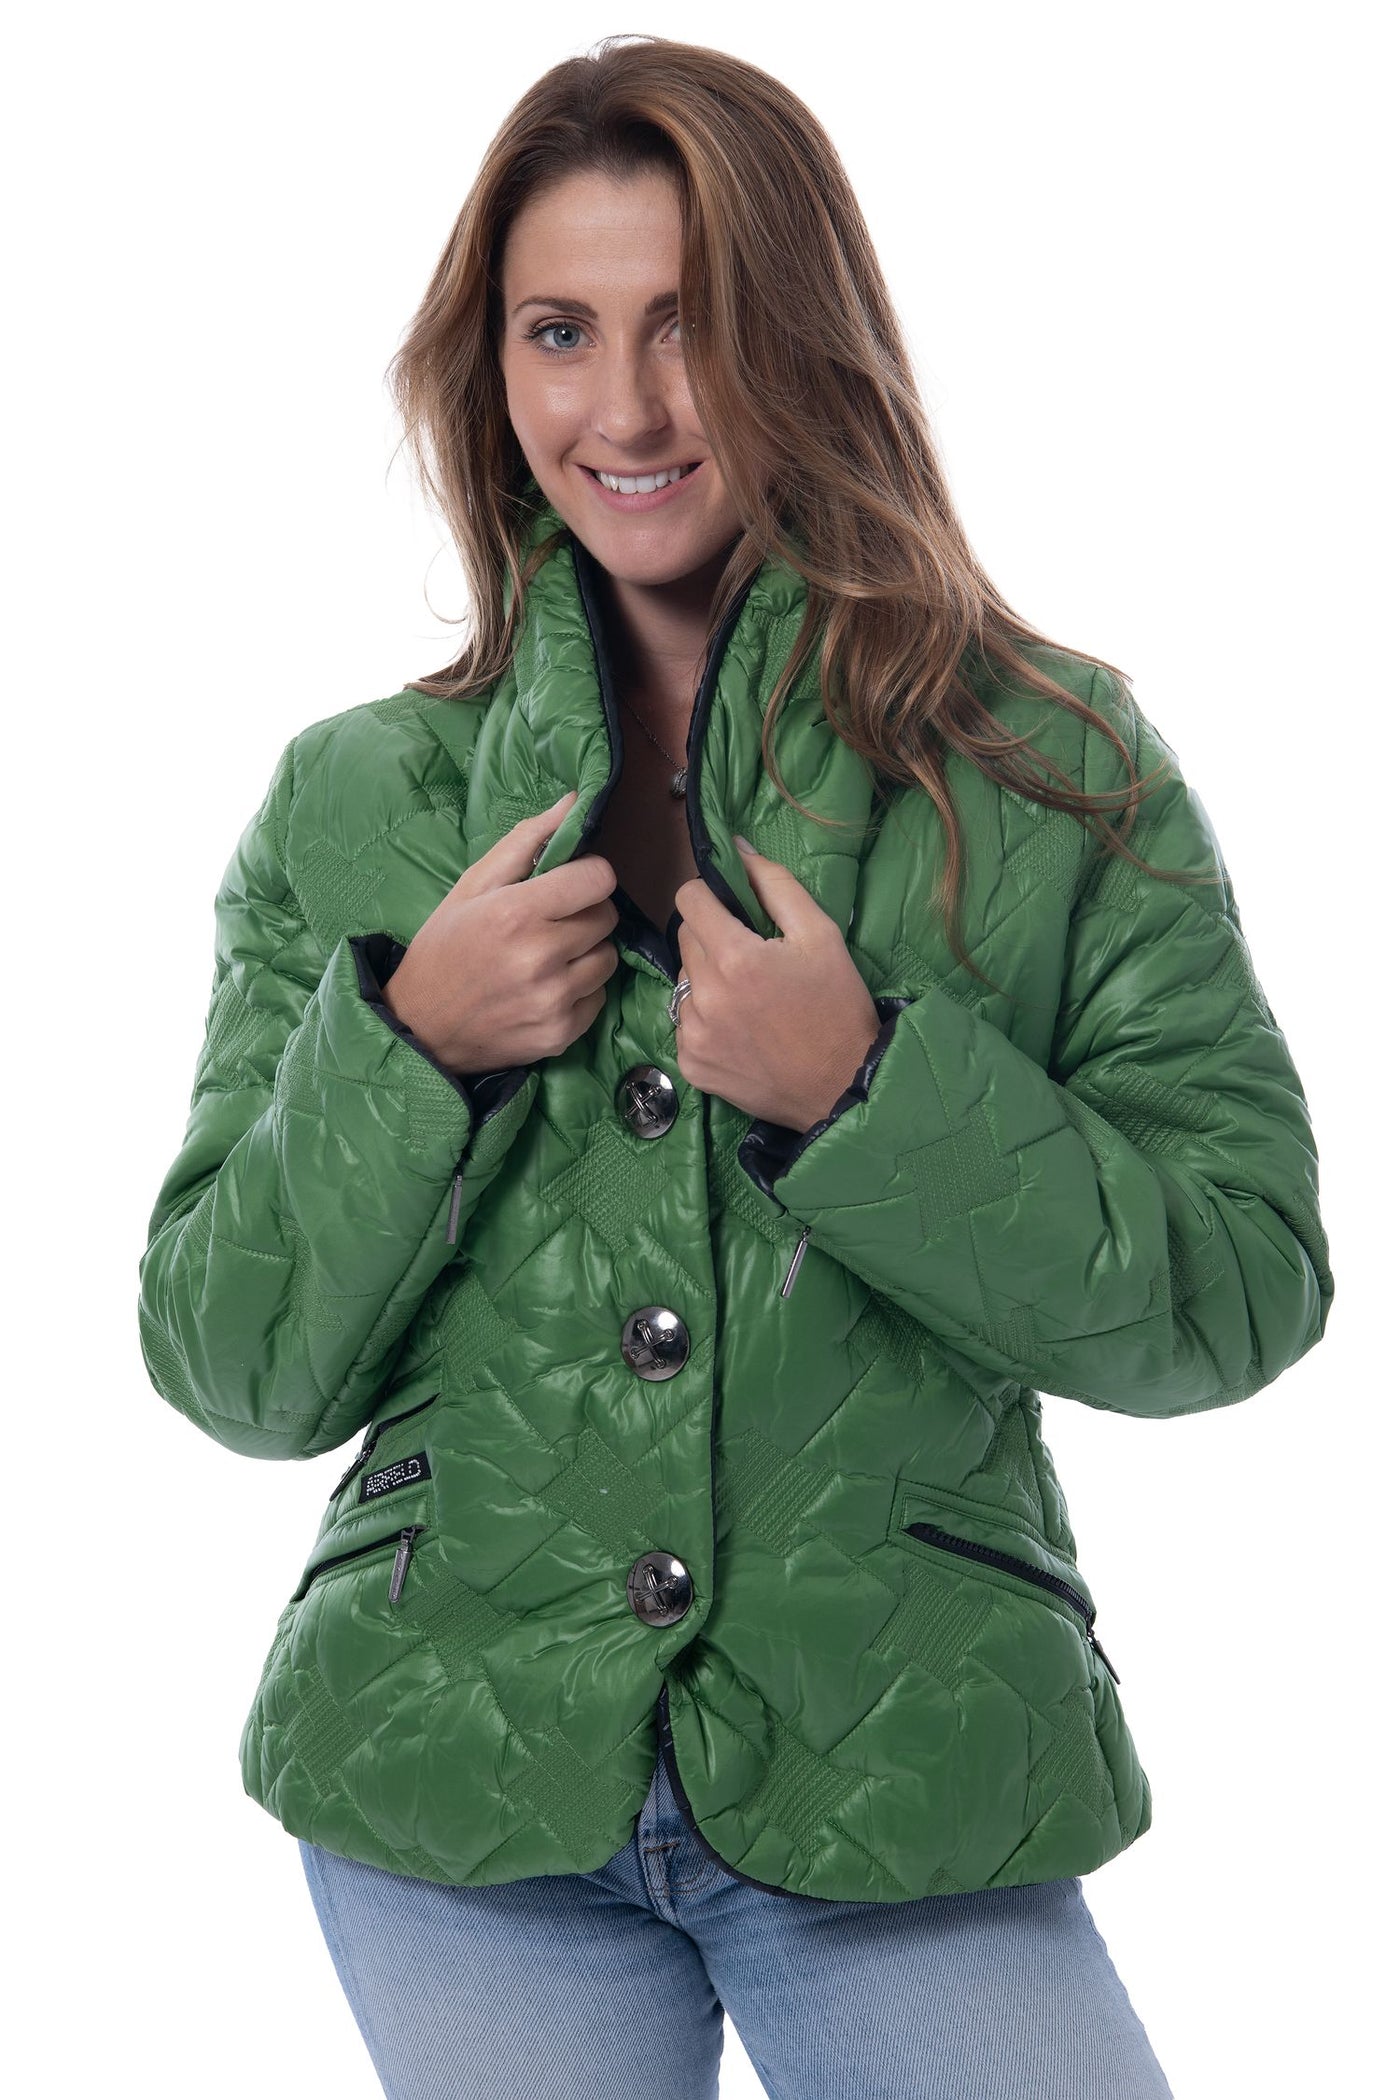 Airfield Green warm jacket